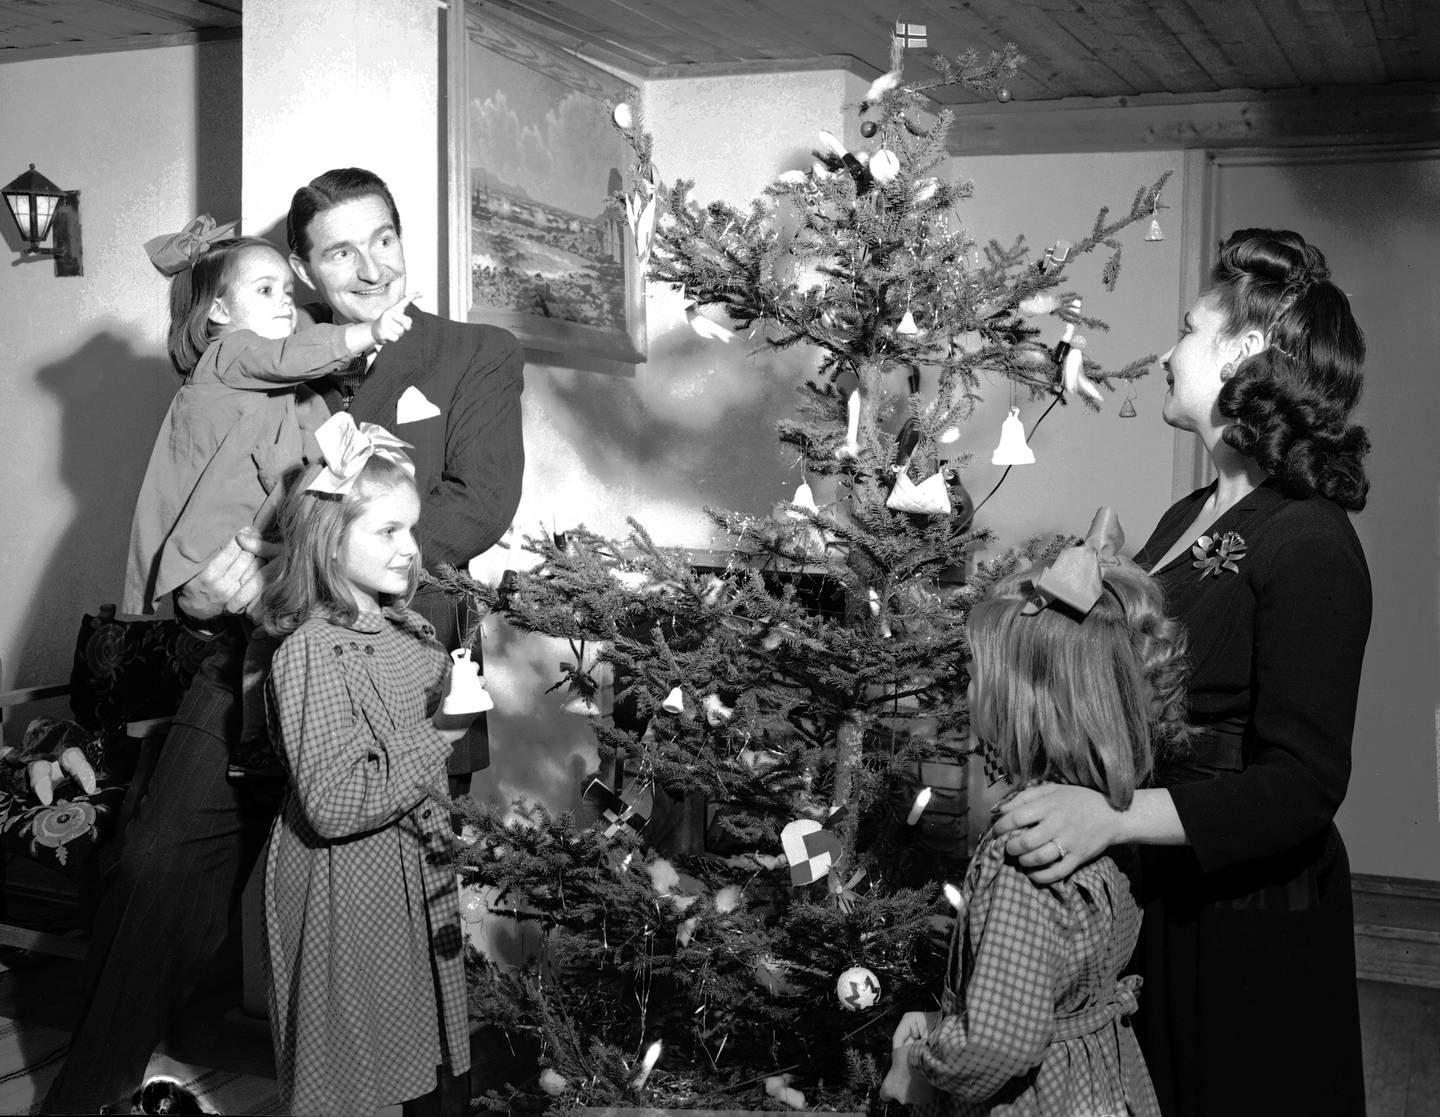 OSLO 19490105 Artisten Jens Book Jenssen med familie feirer jul. Interiør fra stuen, familien står rundt juletreet. Gammeldags uregelmessig juletre.
Foto:  NTB / NTB